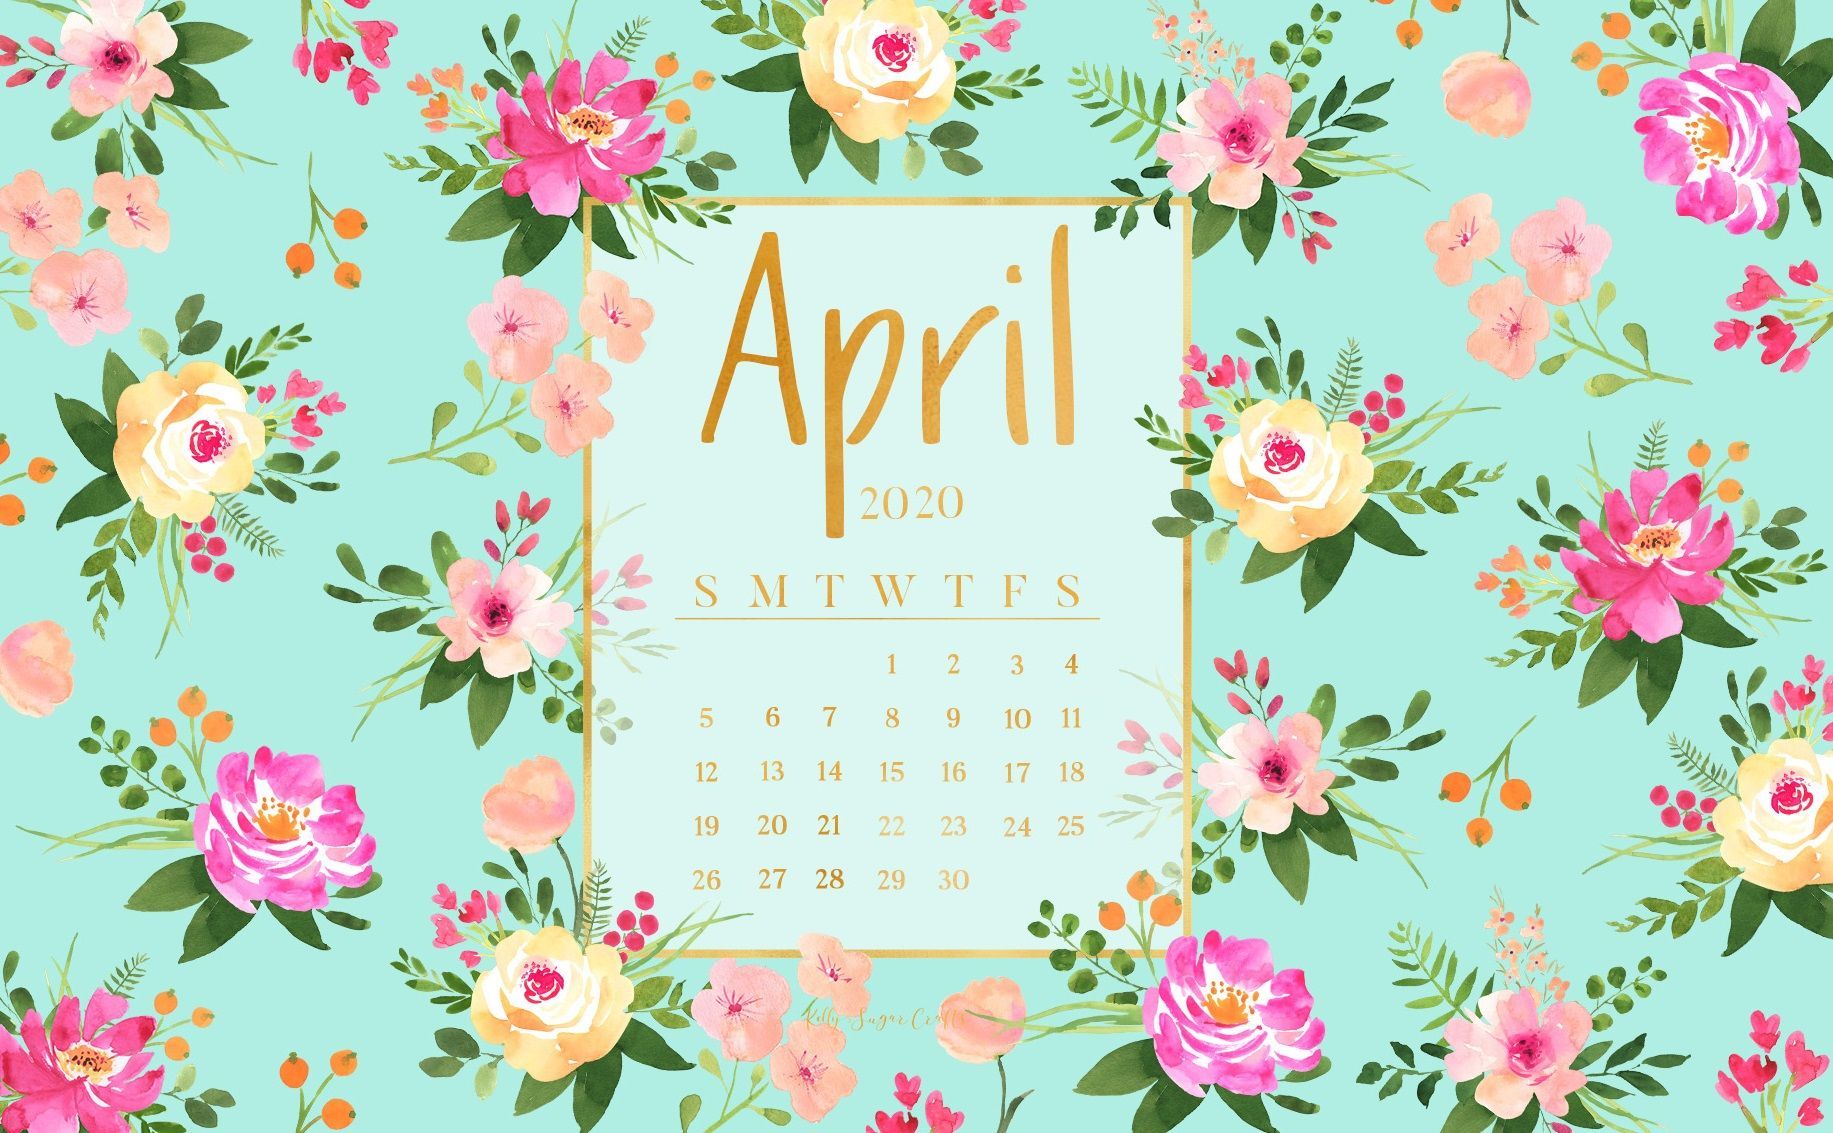 April 2020 Wallpaper Calendar. Desktop wallpaper calendar